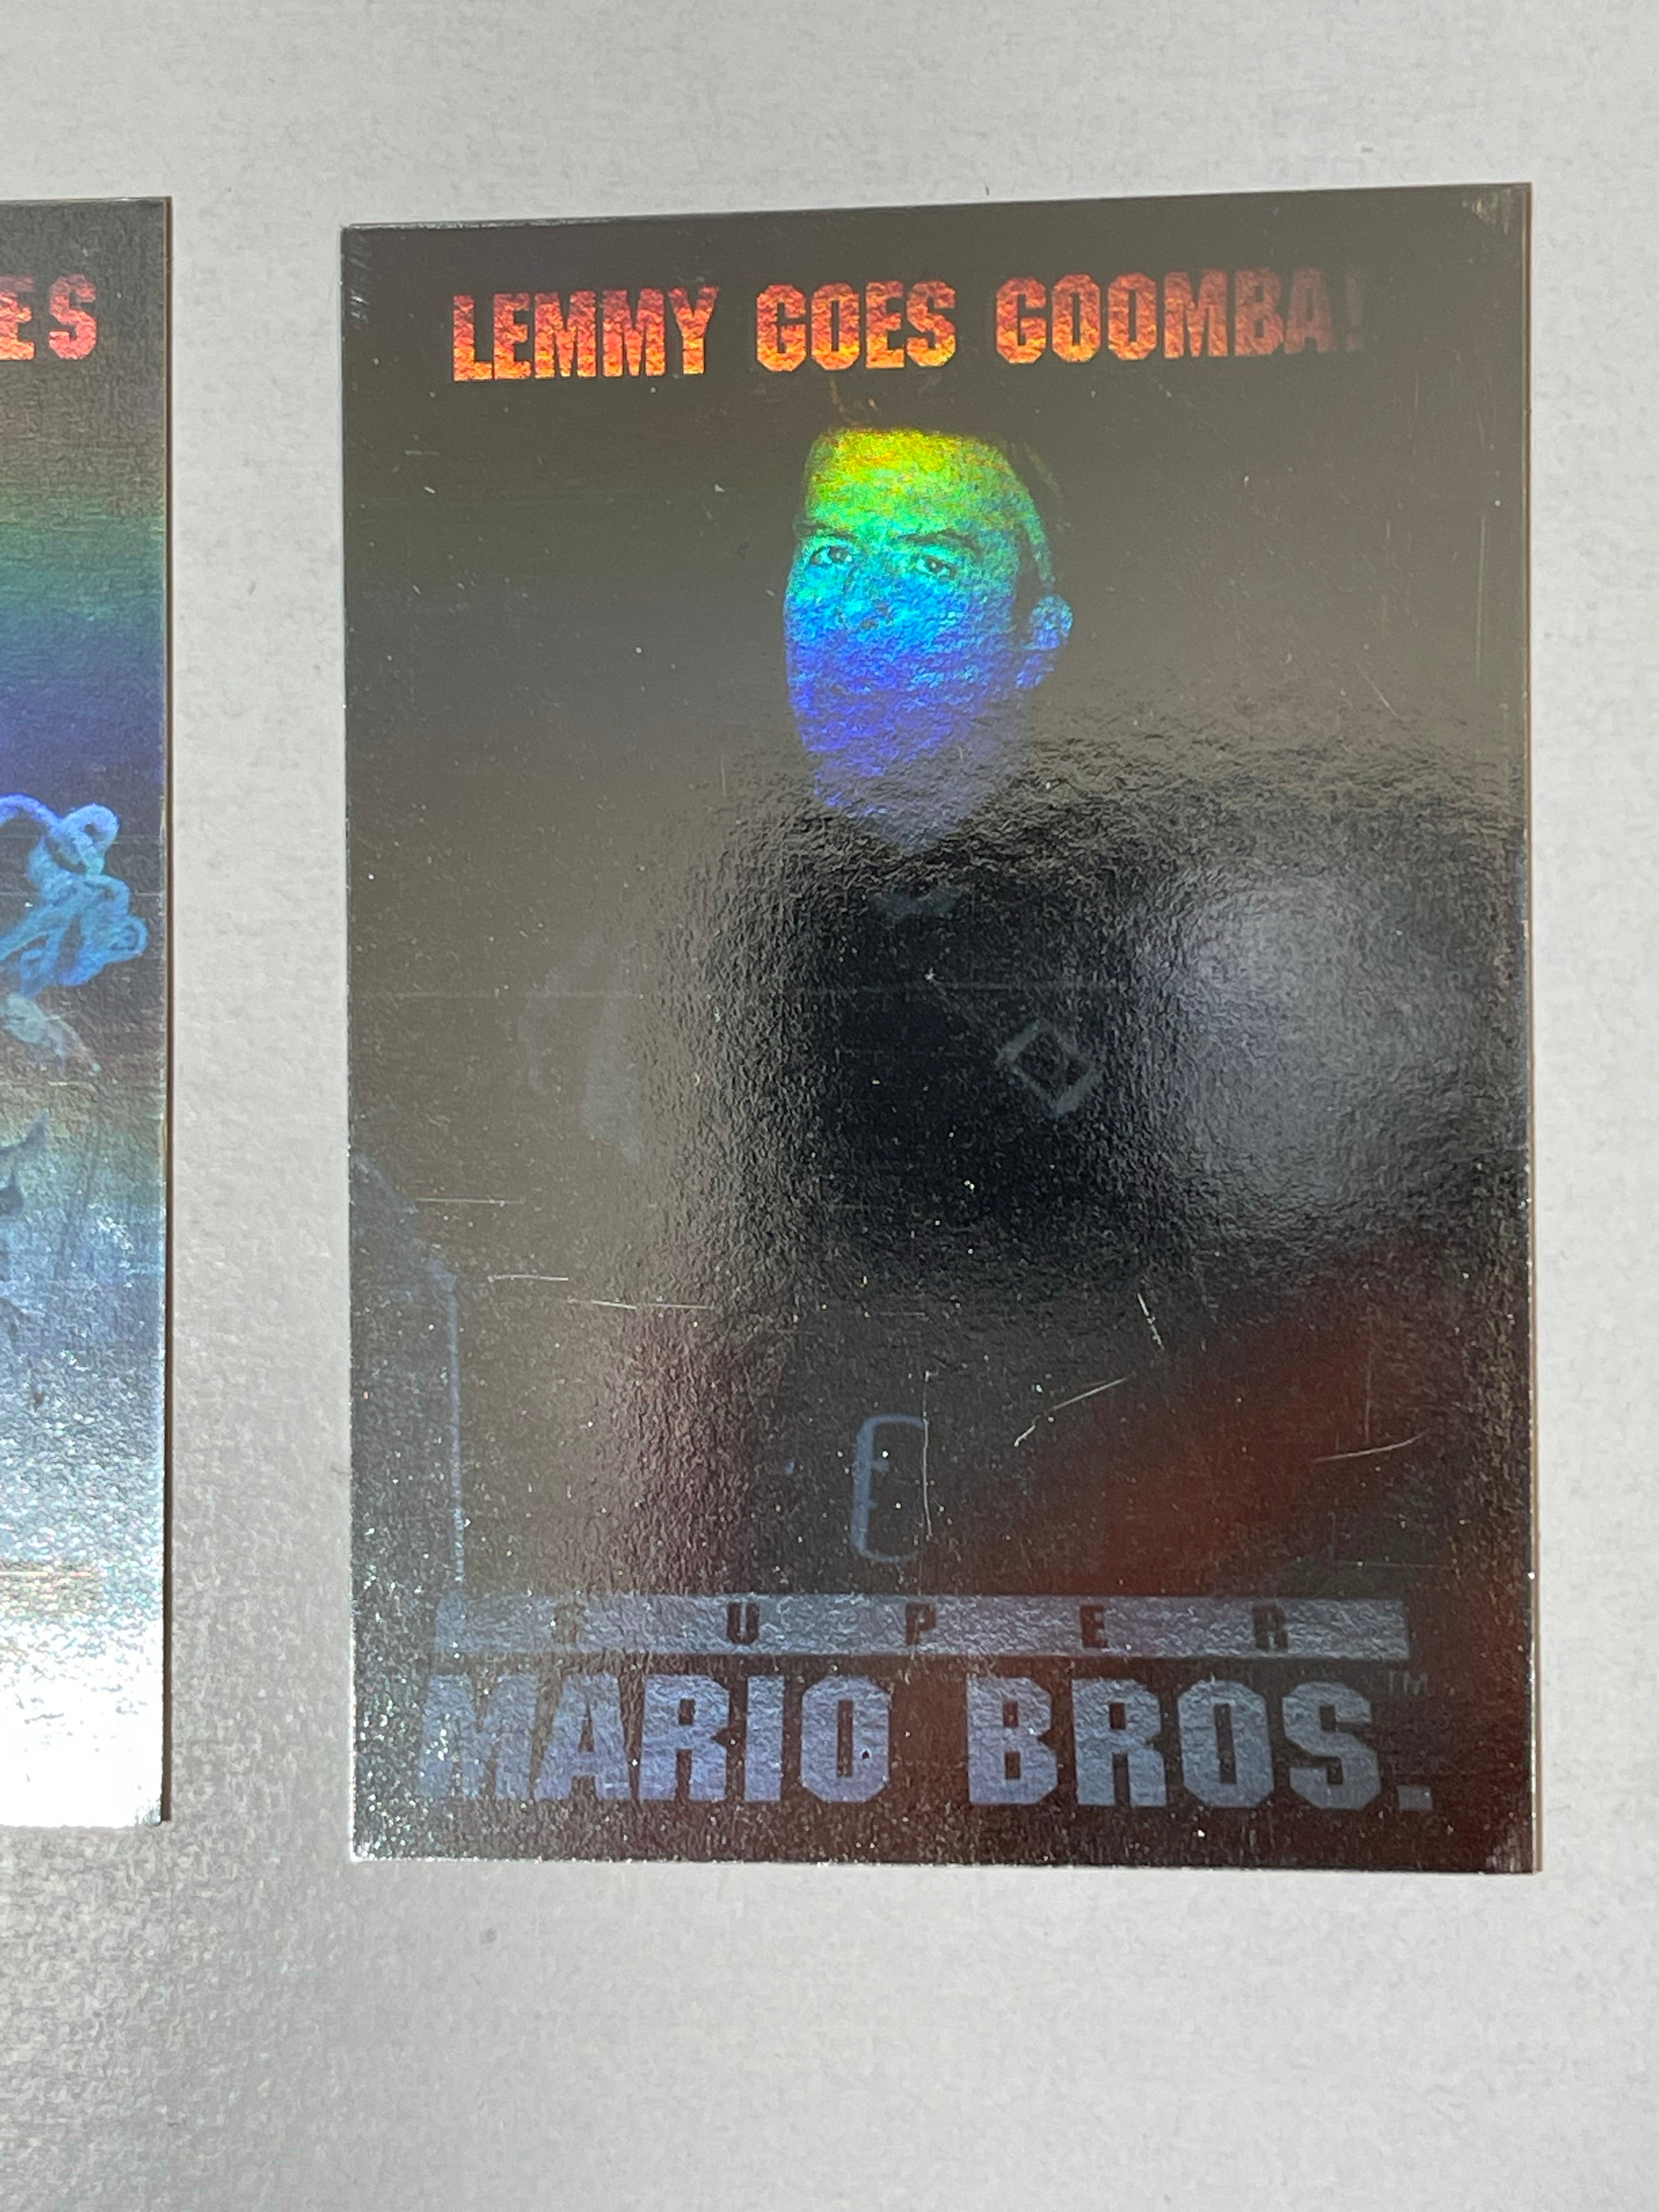 Super Mario Bros. Movie 3 rare hologram insert cards set 1993